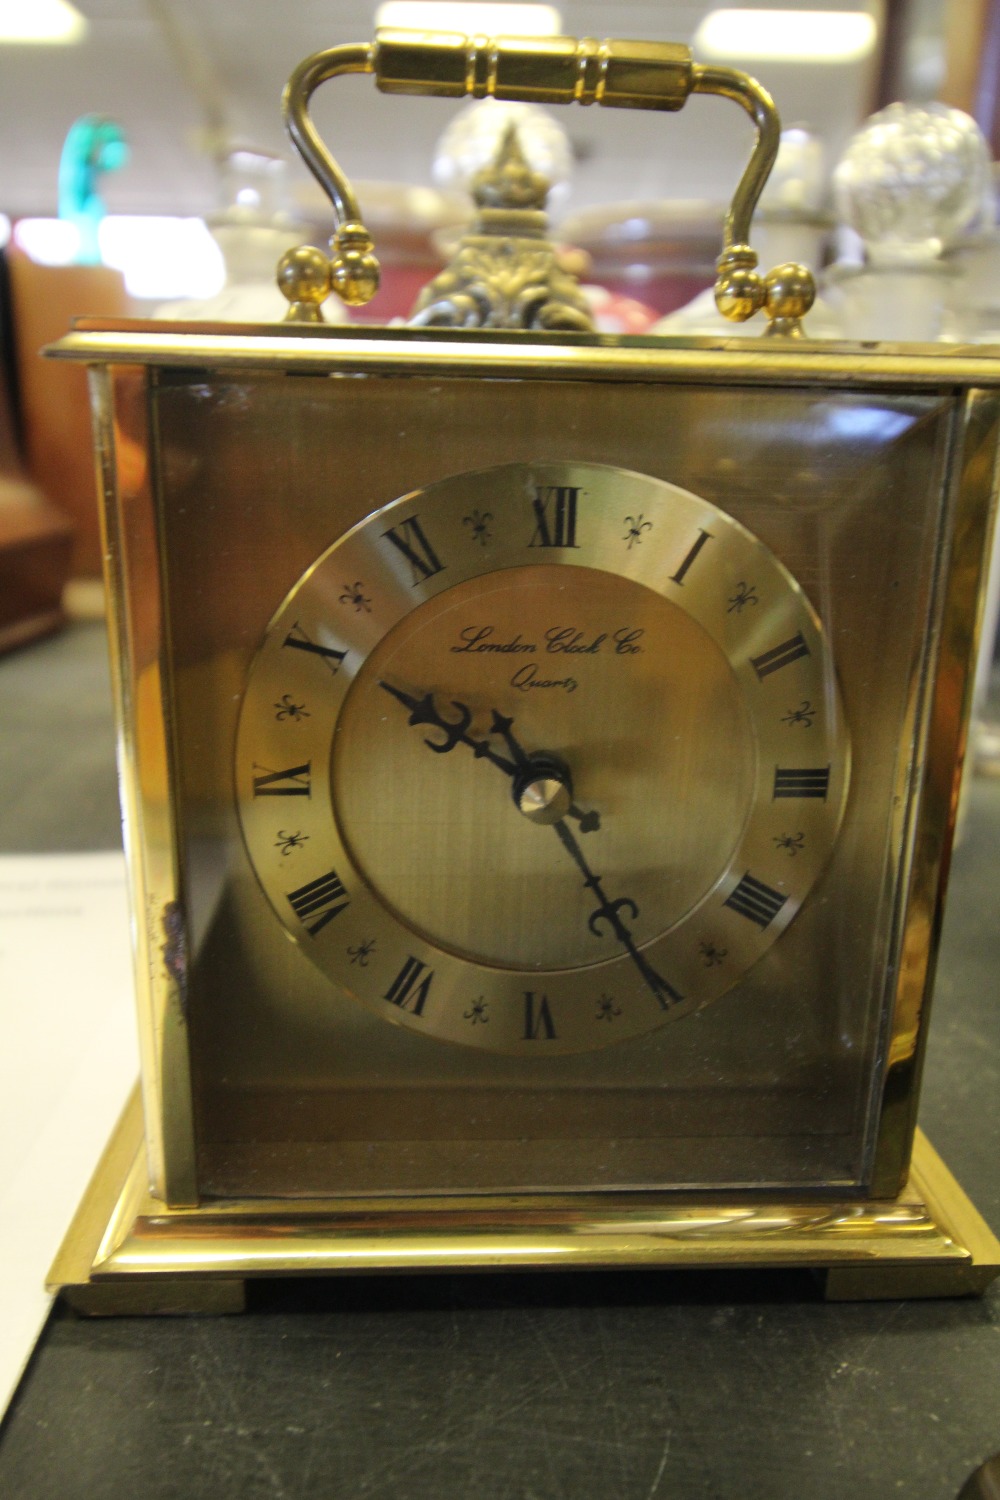 Splendex Mantle Clock, London Clock Company Quartz & Schatz Mantle Clock - Image 4 of 4